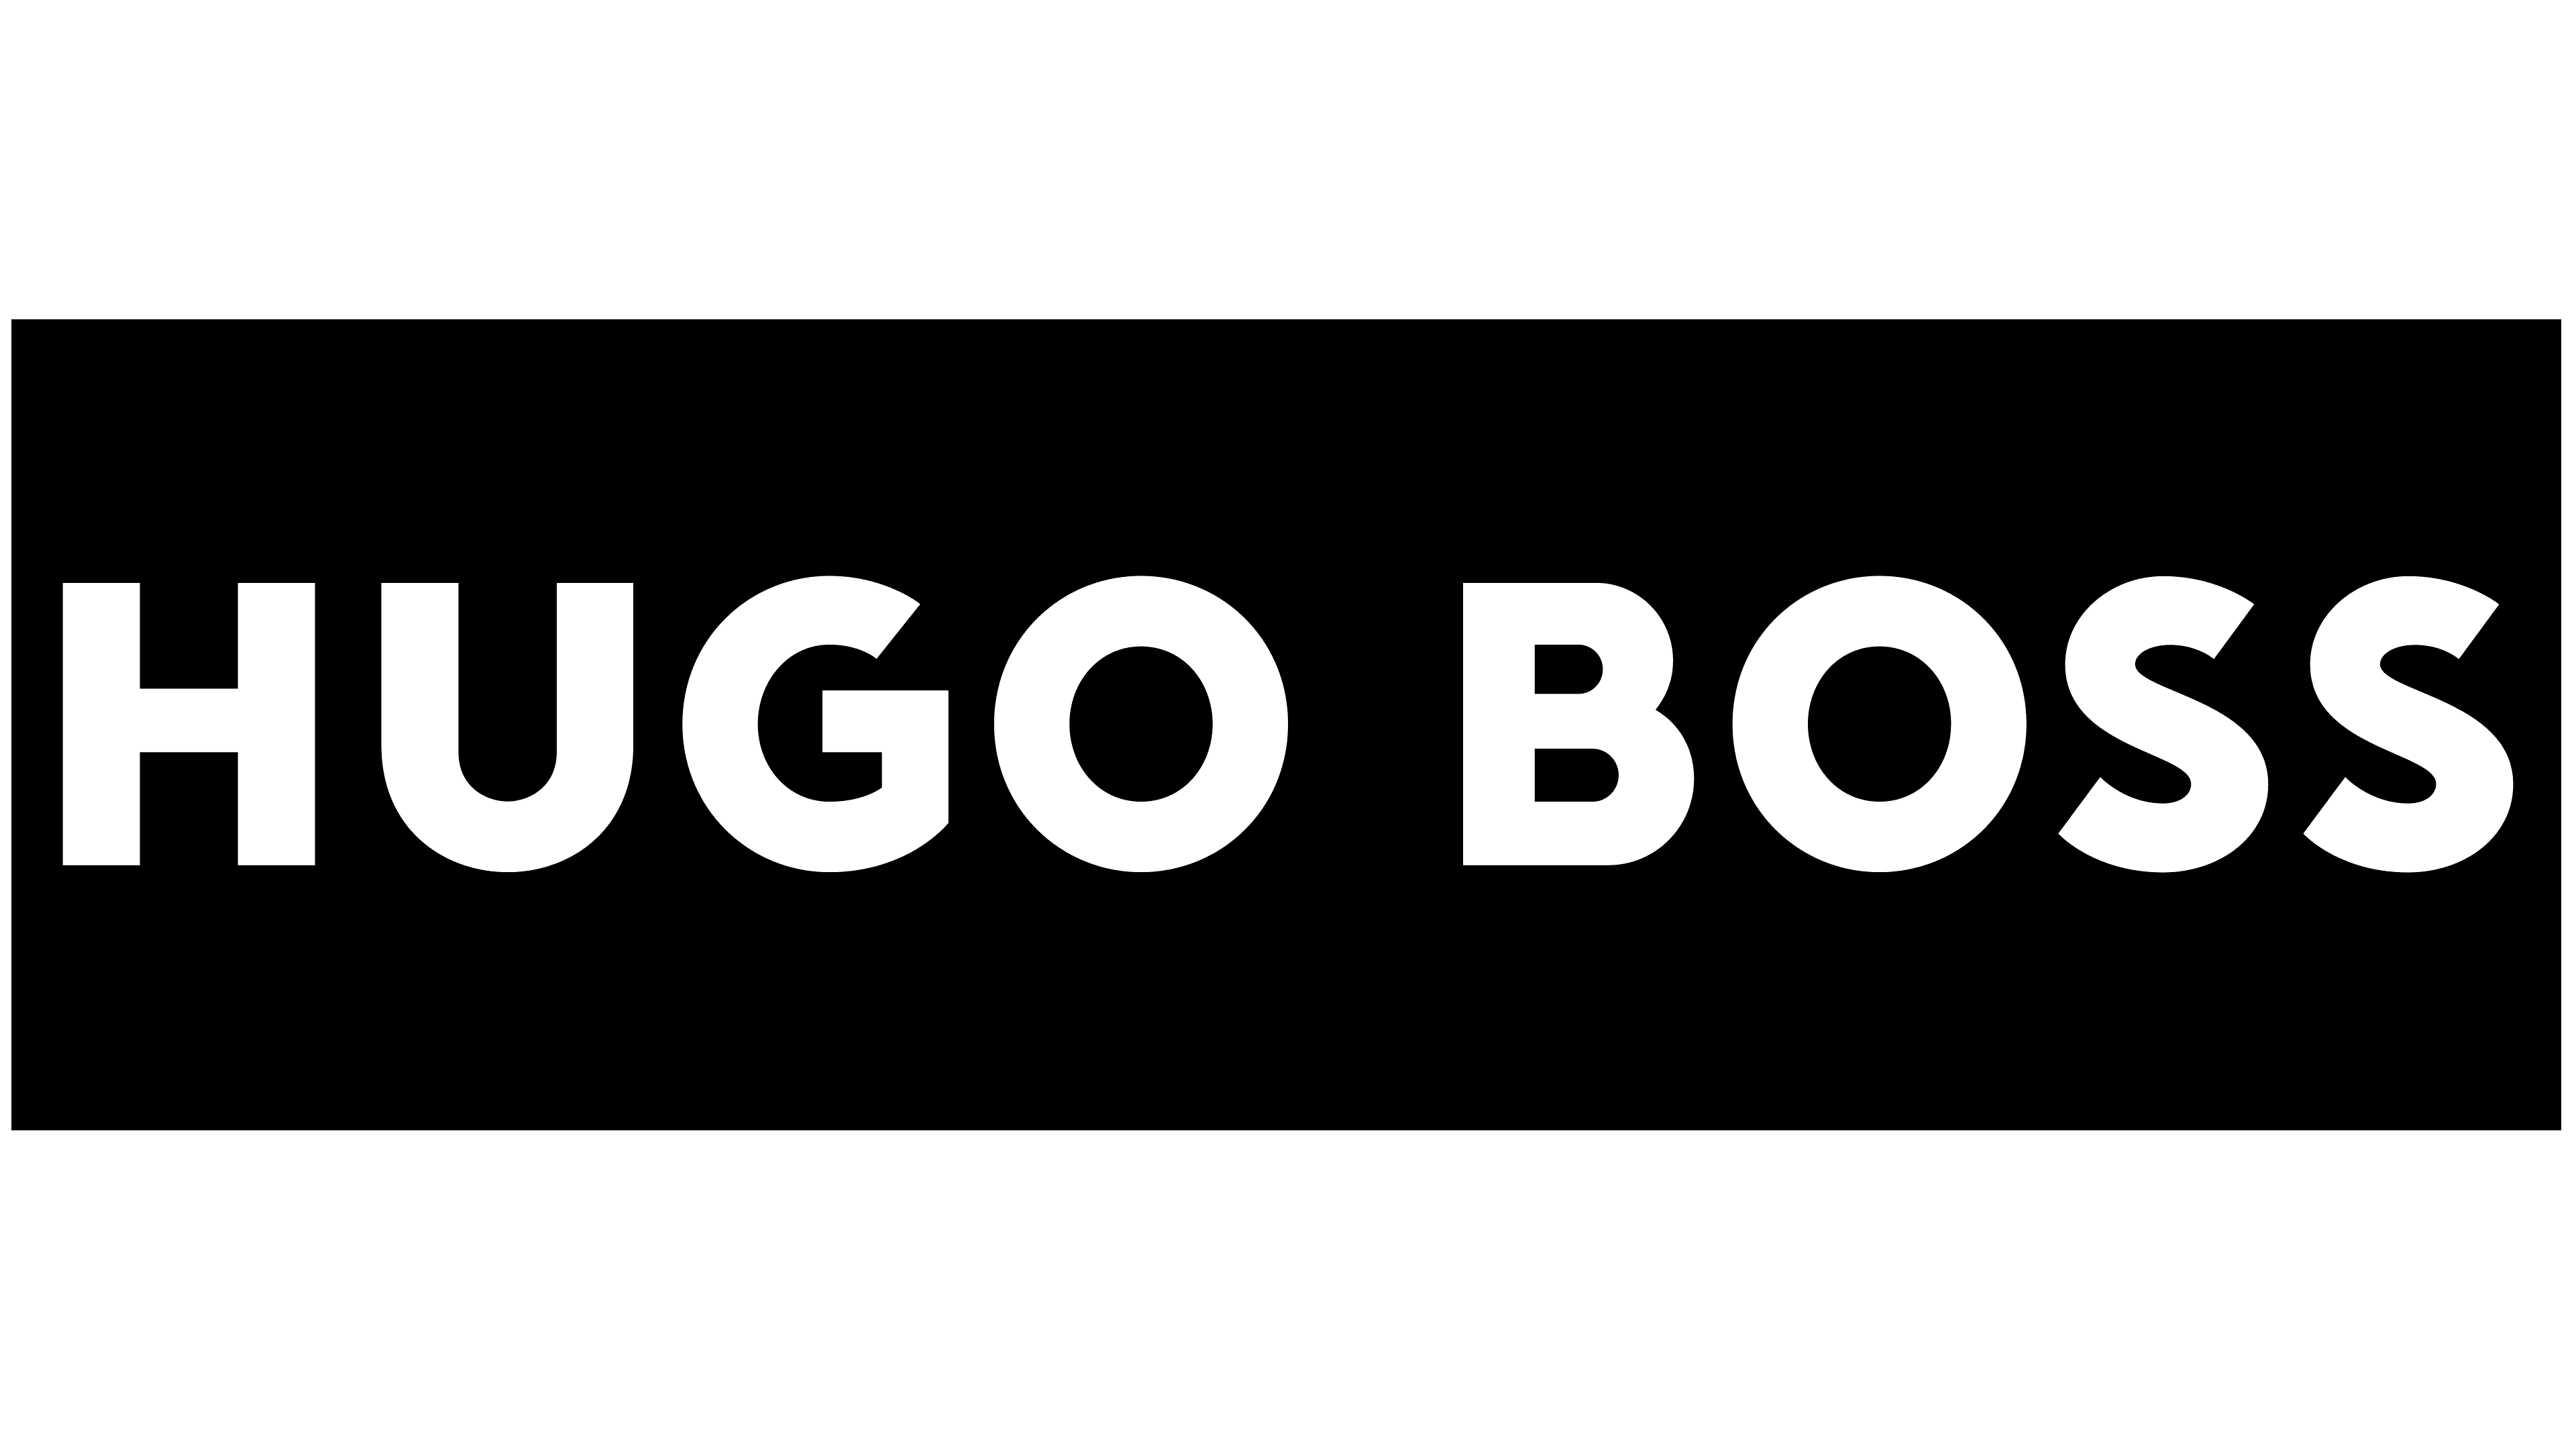 The Boss Vector Logo - Download Free SVG Icon | Worldvectorlogo